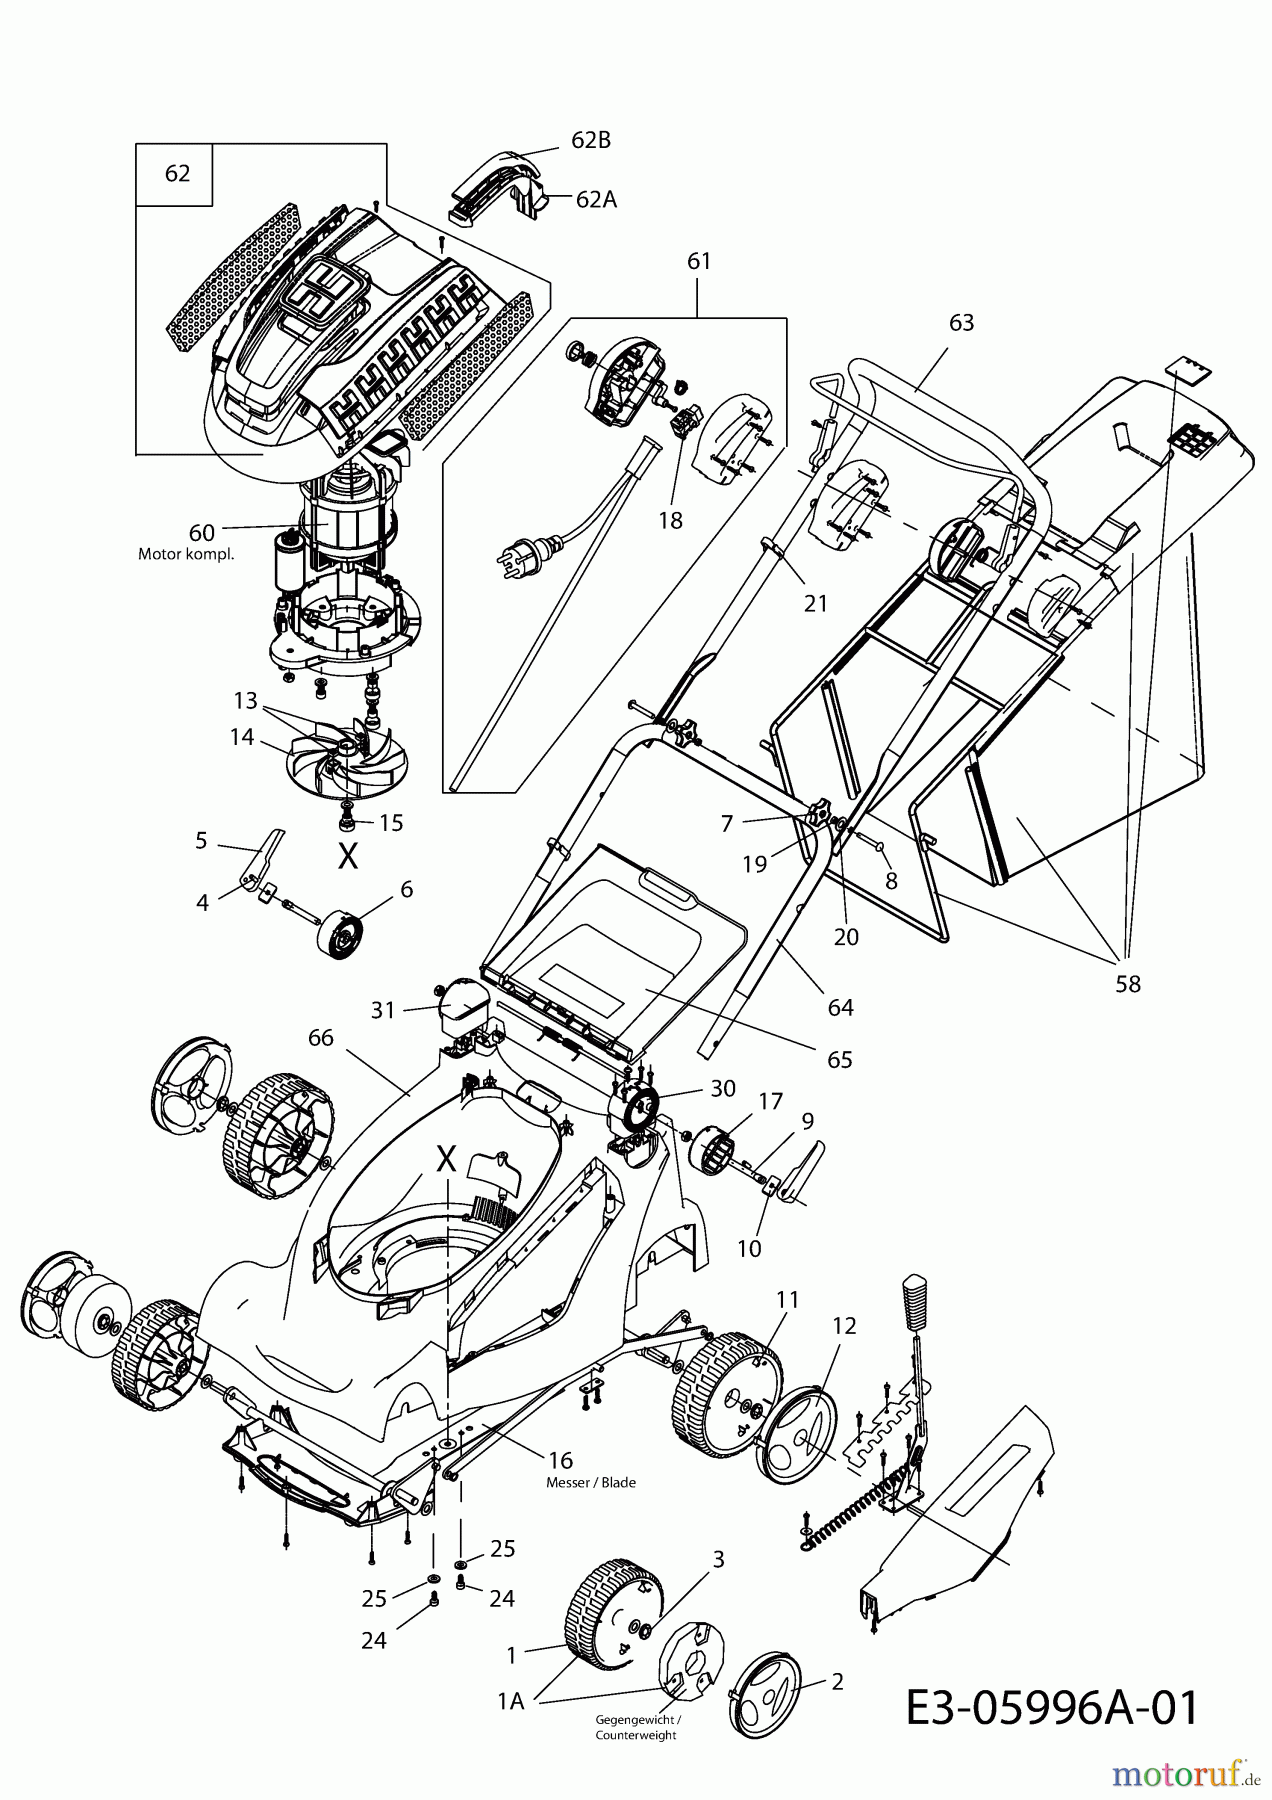  Plantiflor Electric mower 1842 ER 18ACE4L2601  (2012) Basic machine